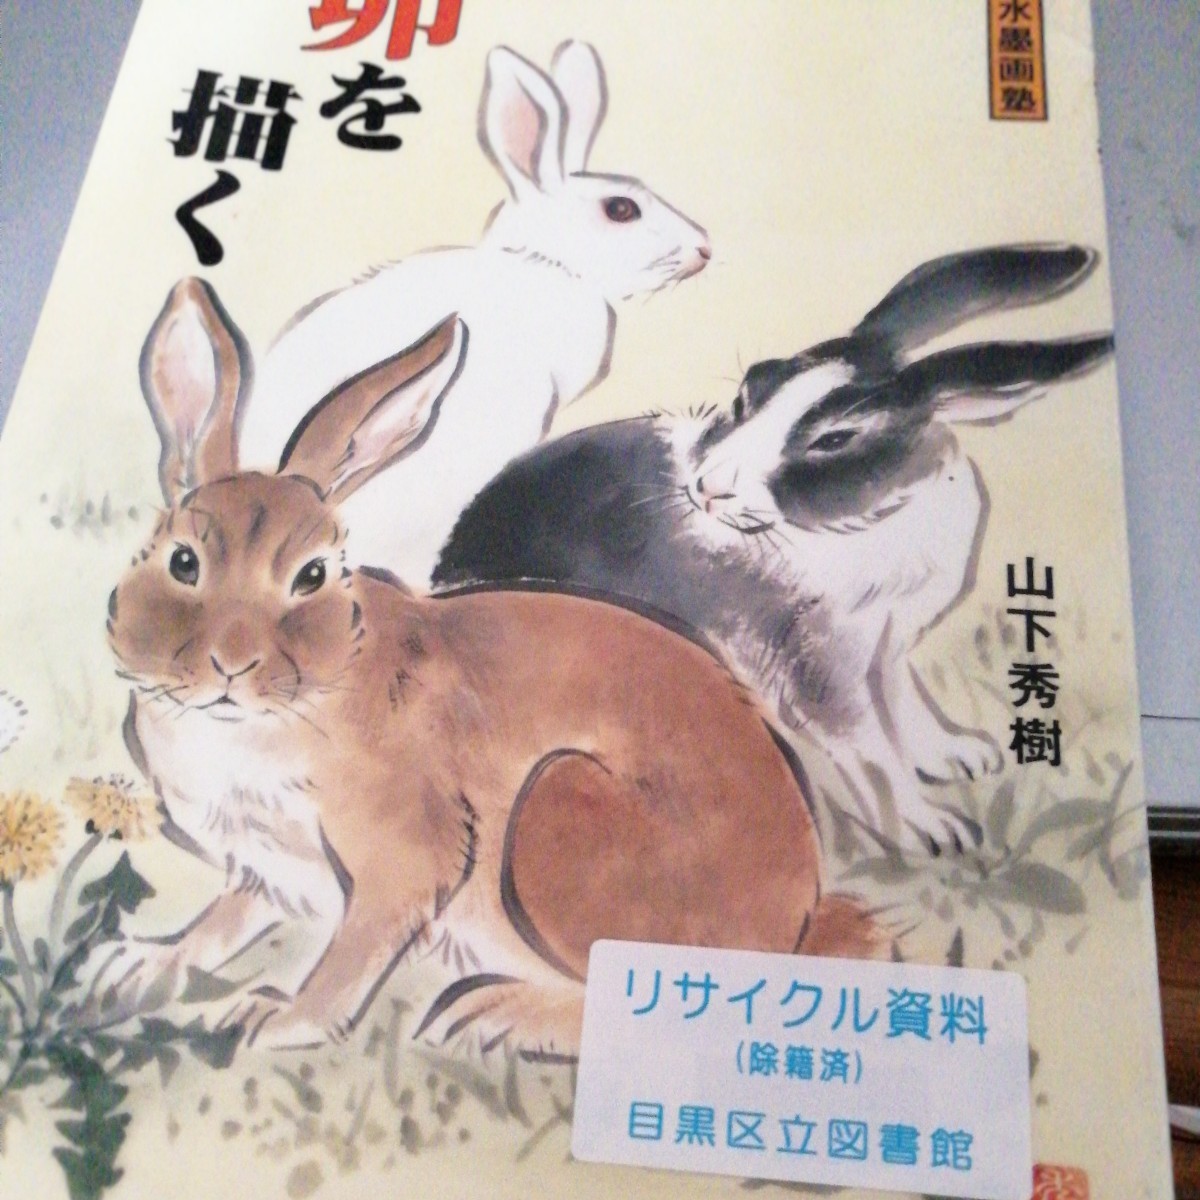 Drawing a rabbit ink painting school/Hideki Yamashita (author), art, entertainment, painting, Technique book